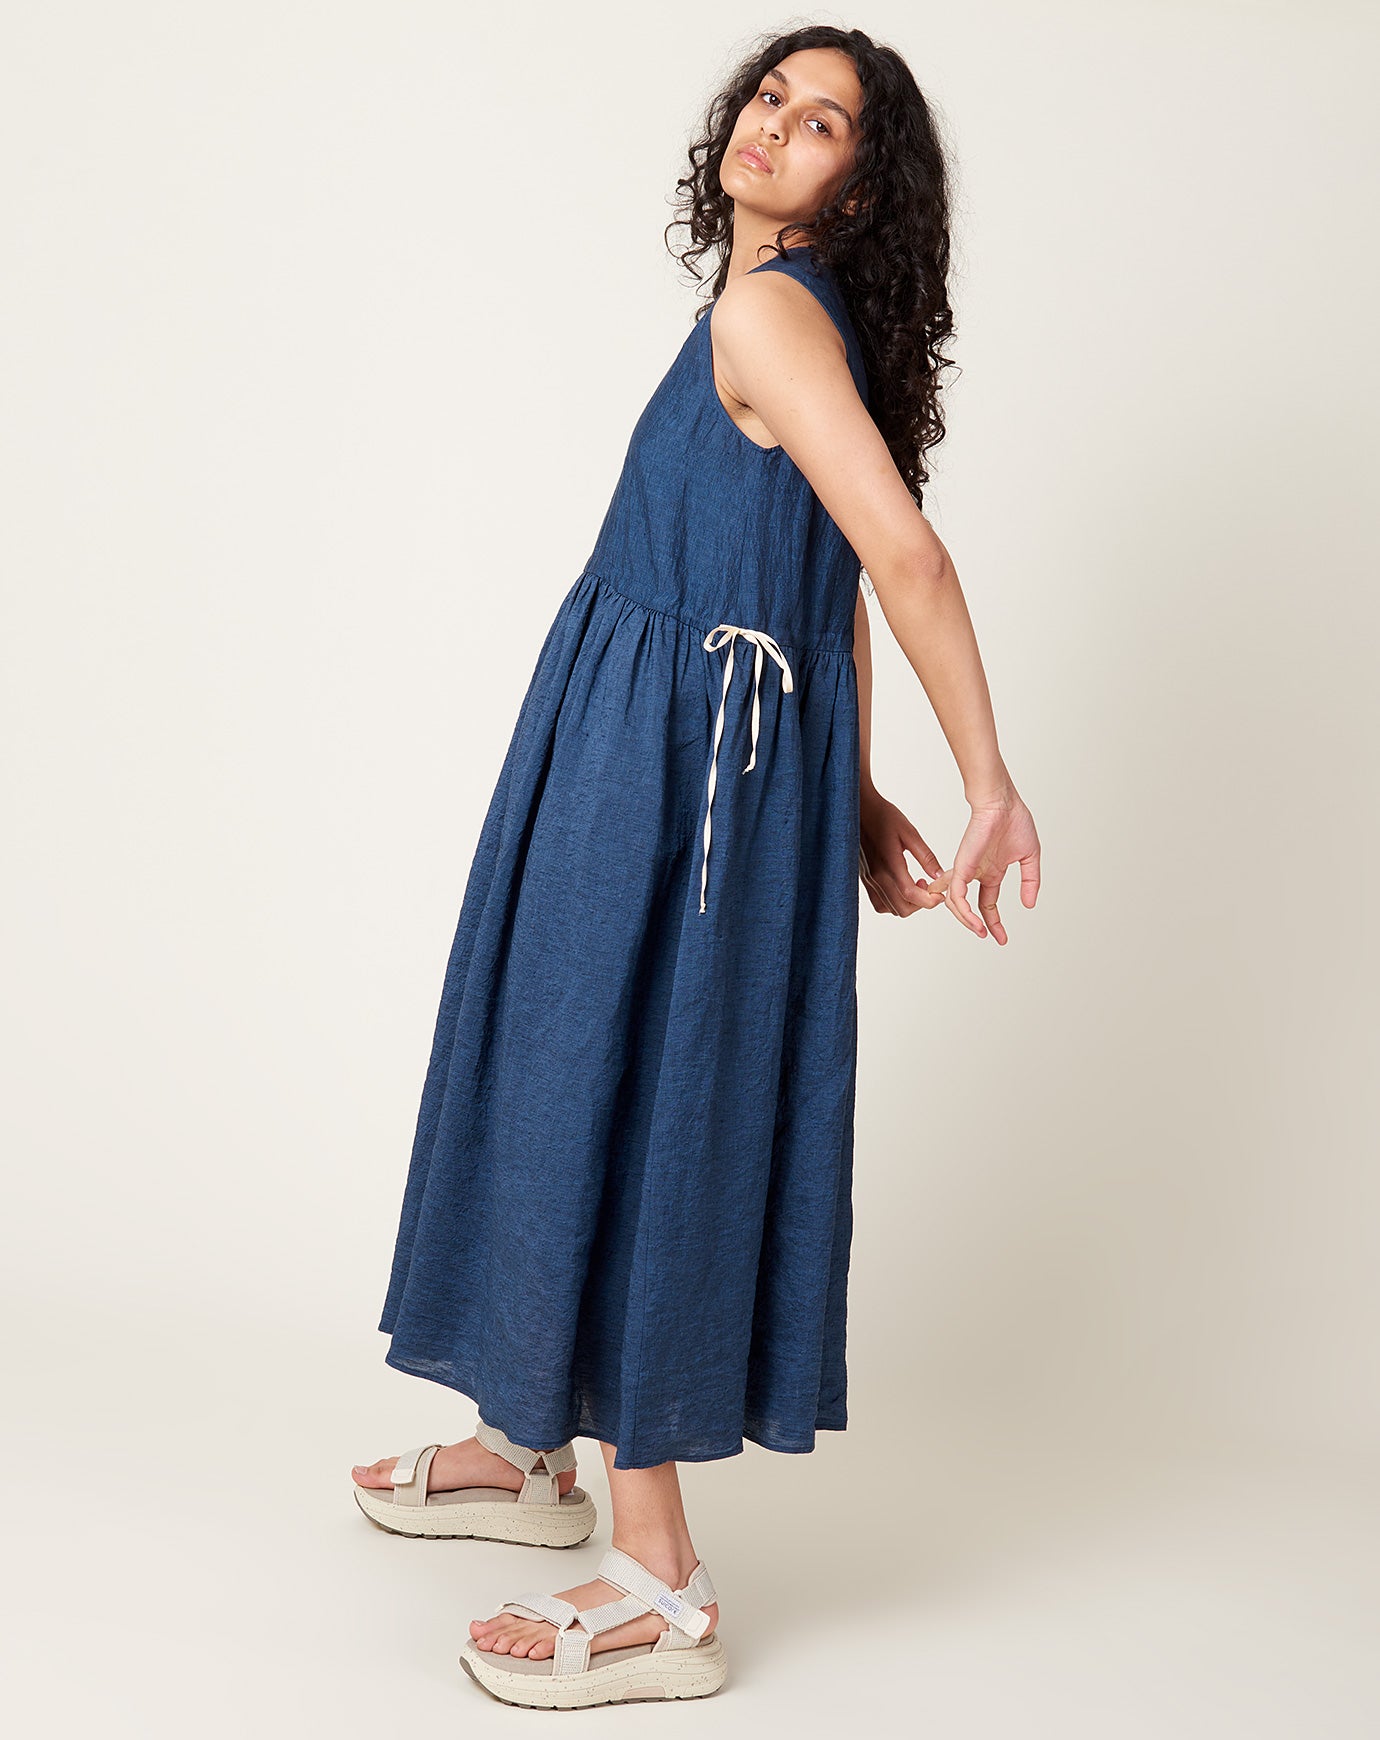 apuntob Sleeveless Drawstring Dress in Denim Chambray Linen